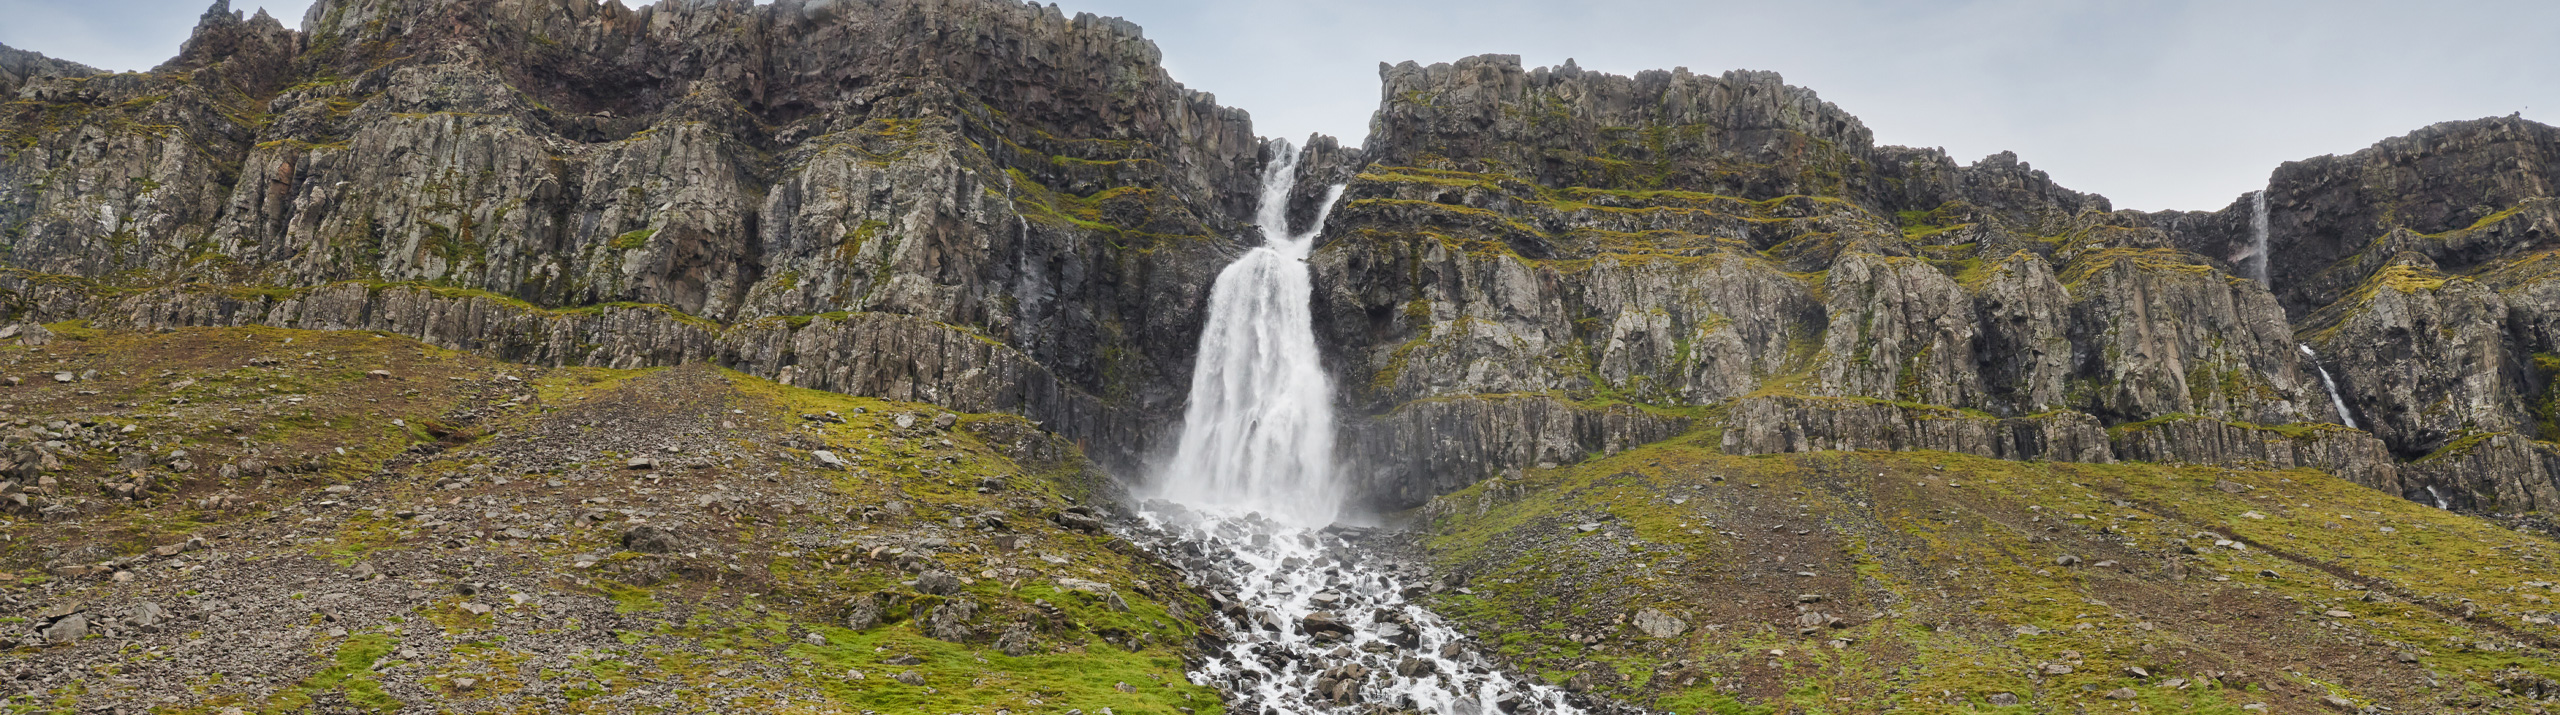 Djupavikurfoss vandfaldet - vandfald i Island